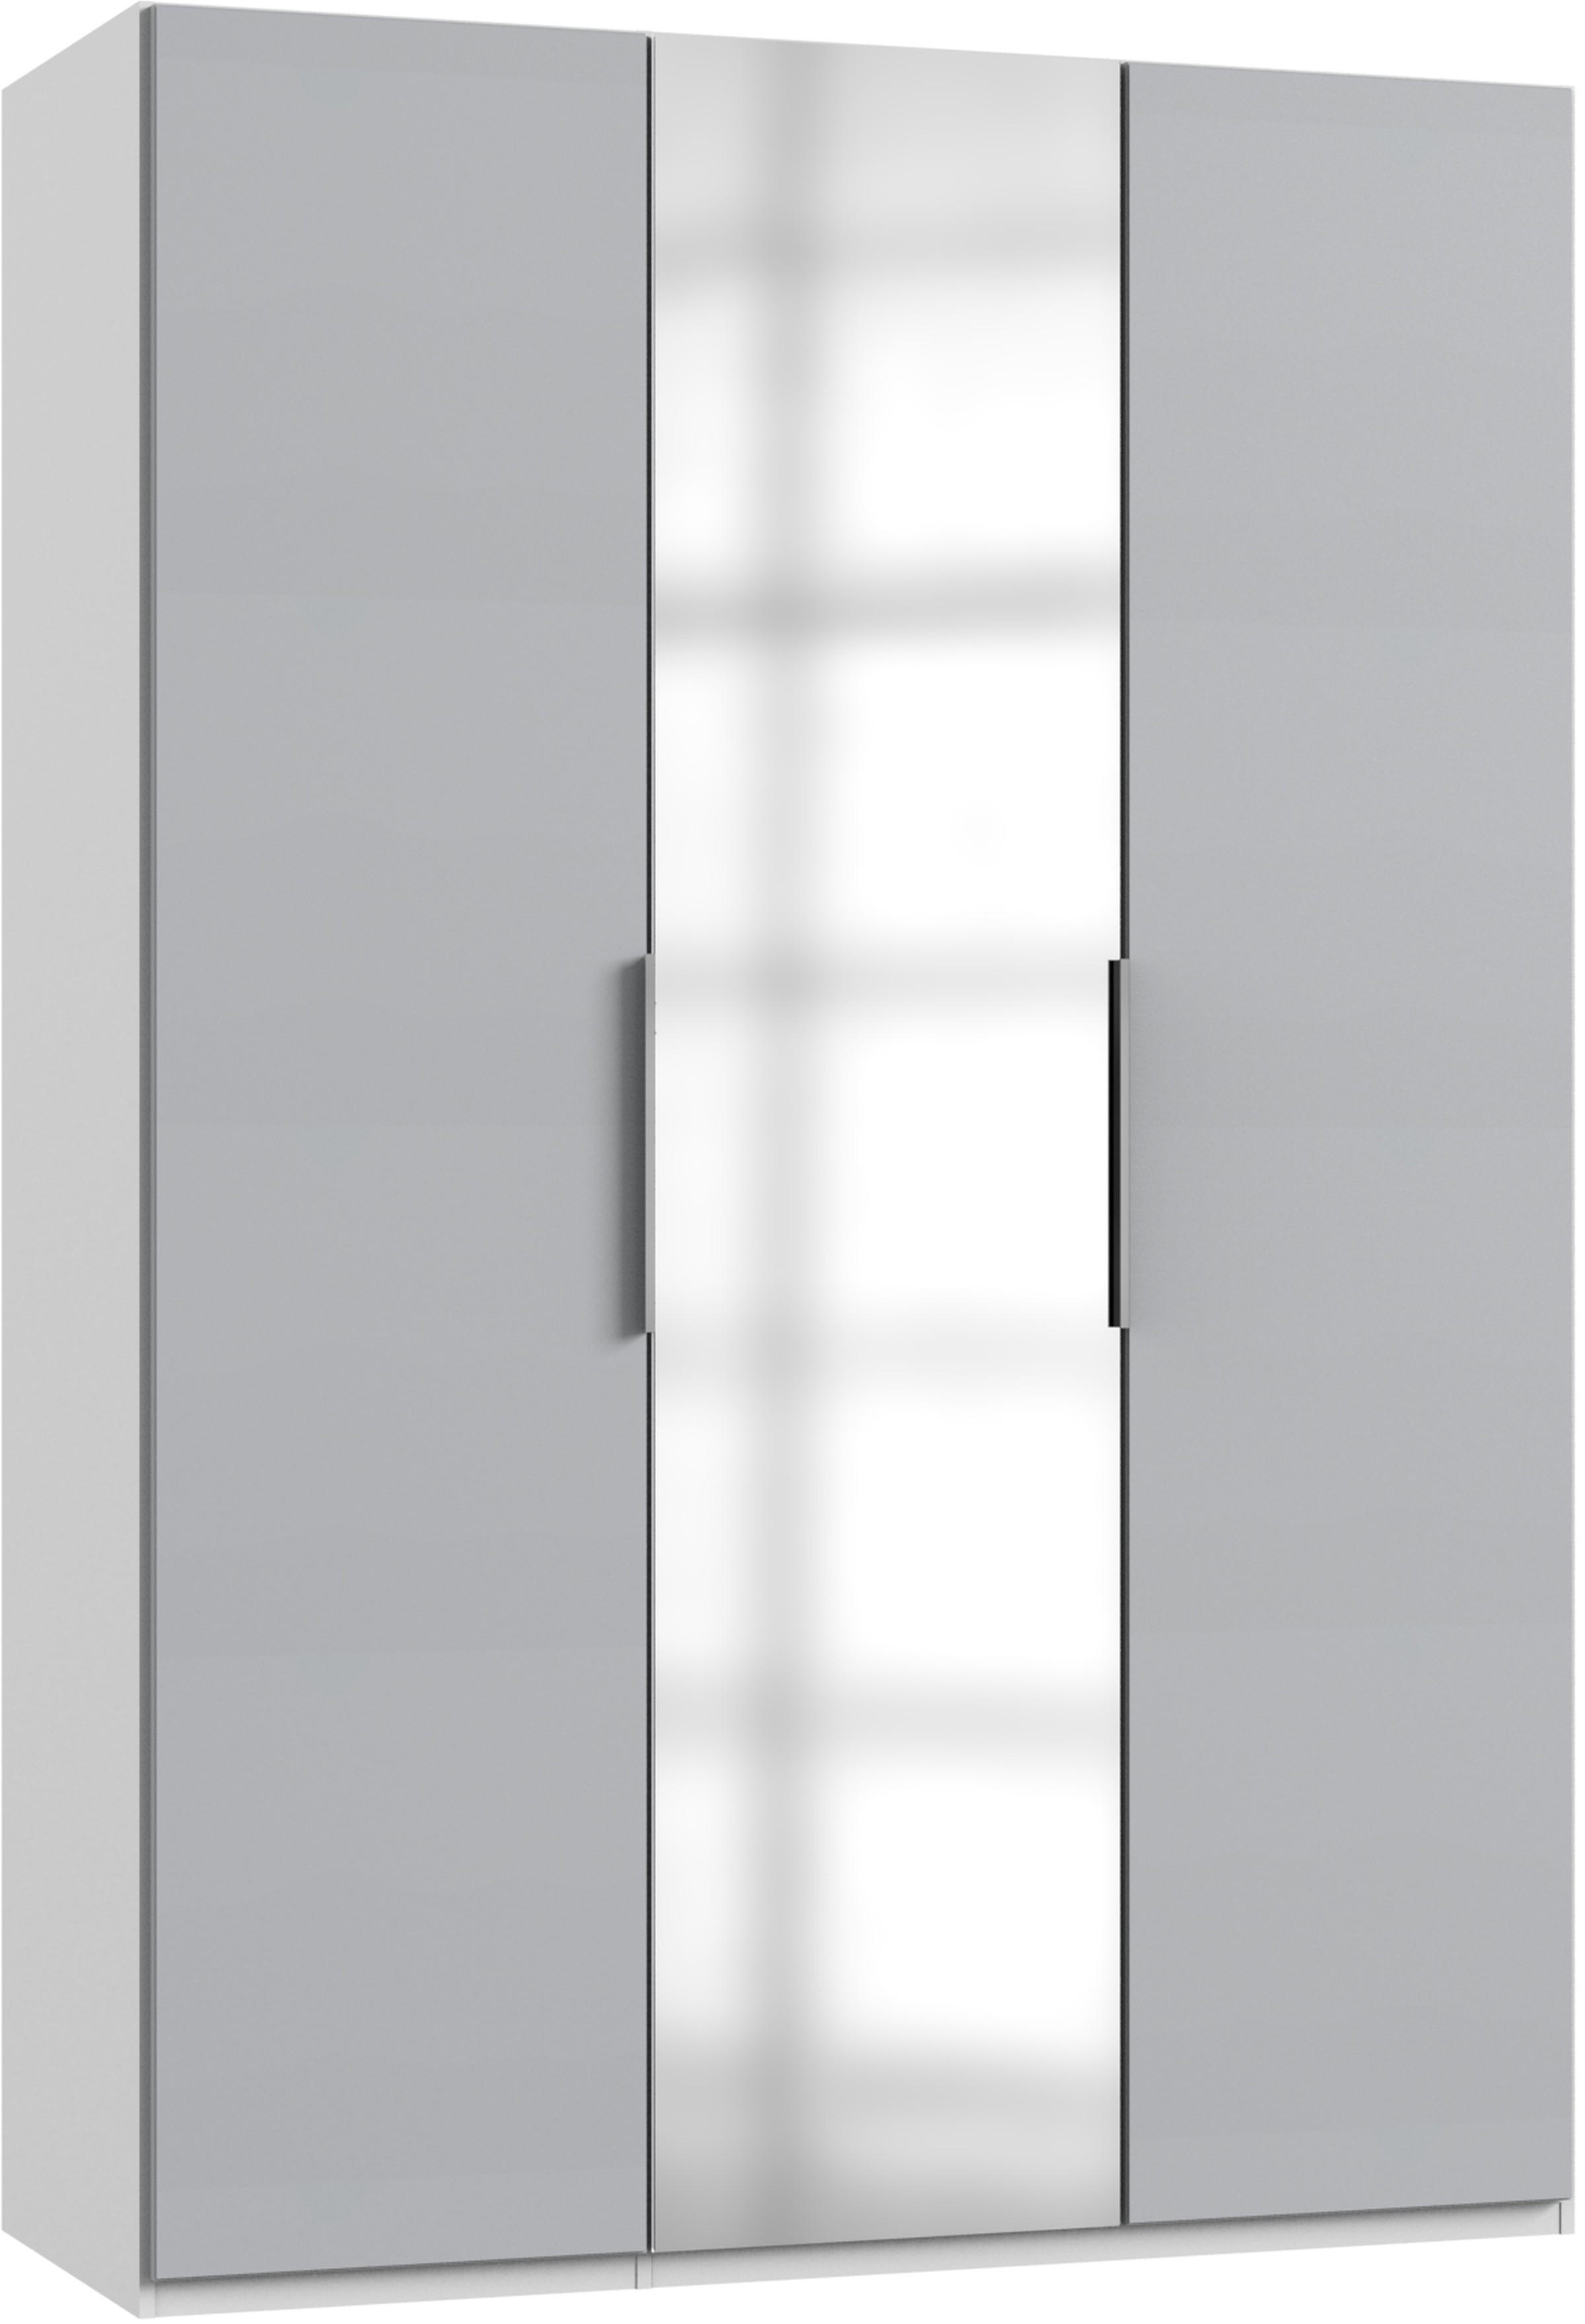 DREHTÜRENSCHRANK 3-türig Weiß, Hellgrau  - Chromfarben/Hellgrau, MODERN, Holzwerkstoff (150/216/58cm) - MID.YOU